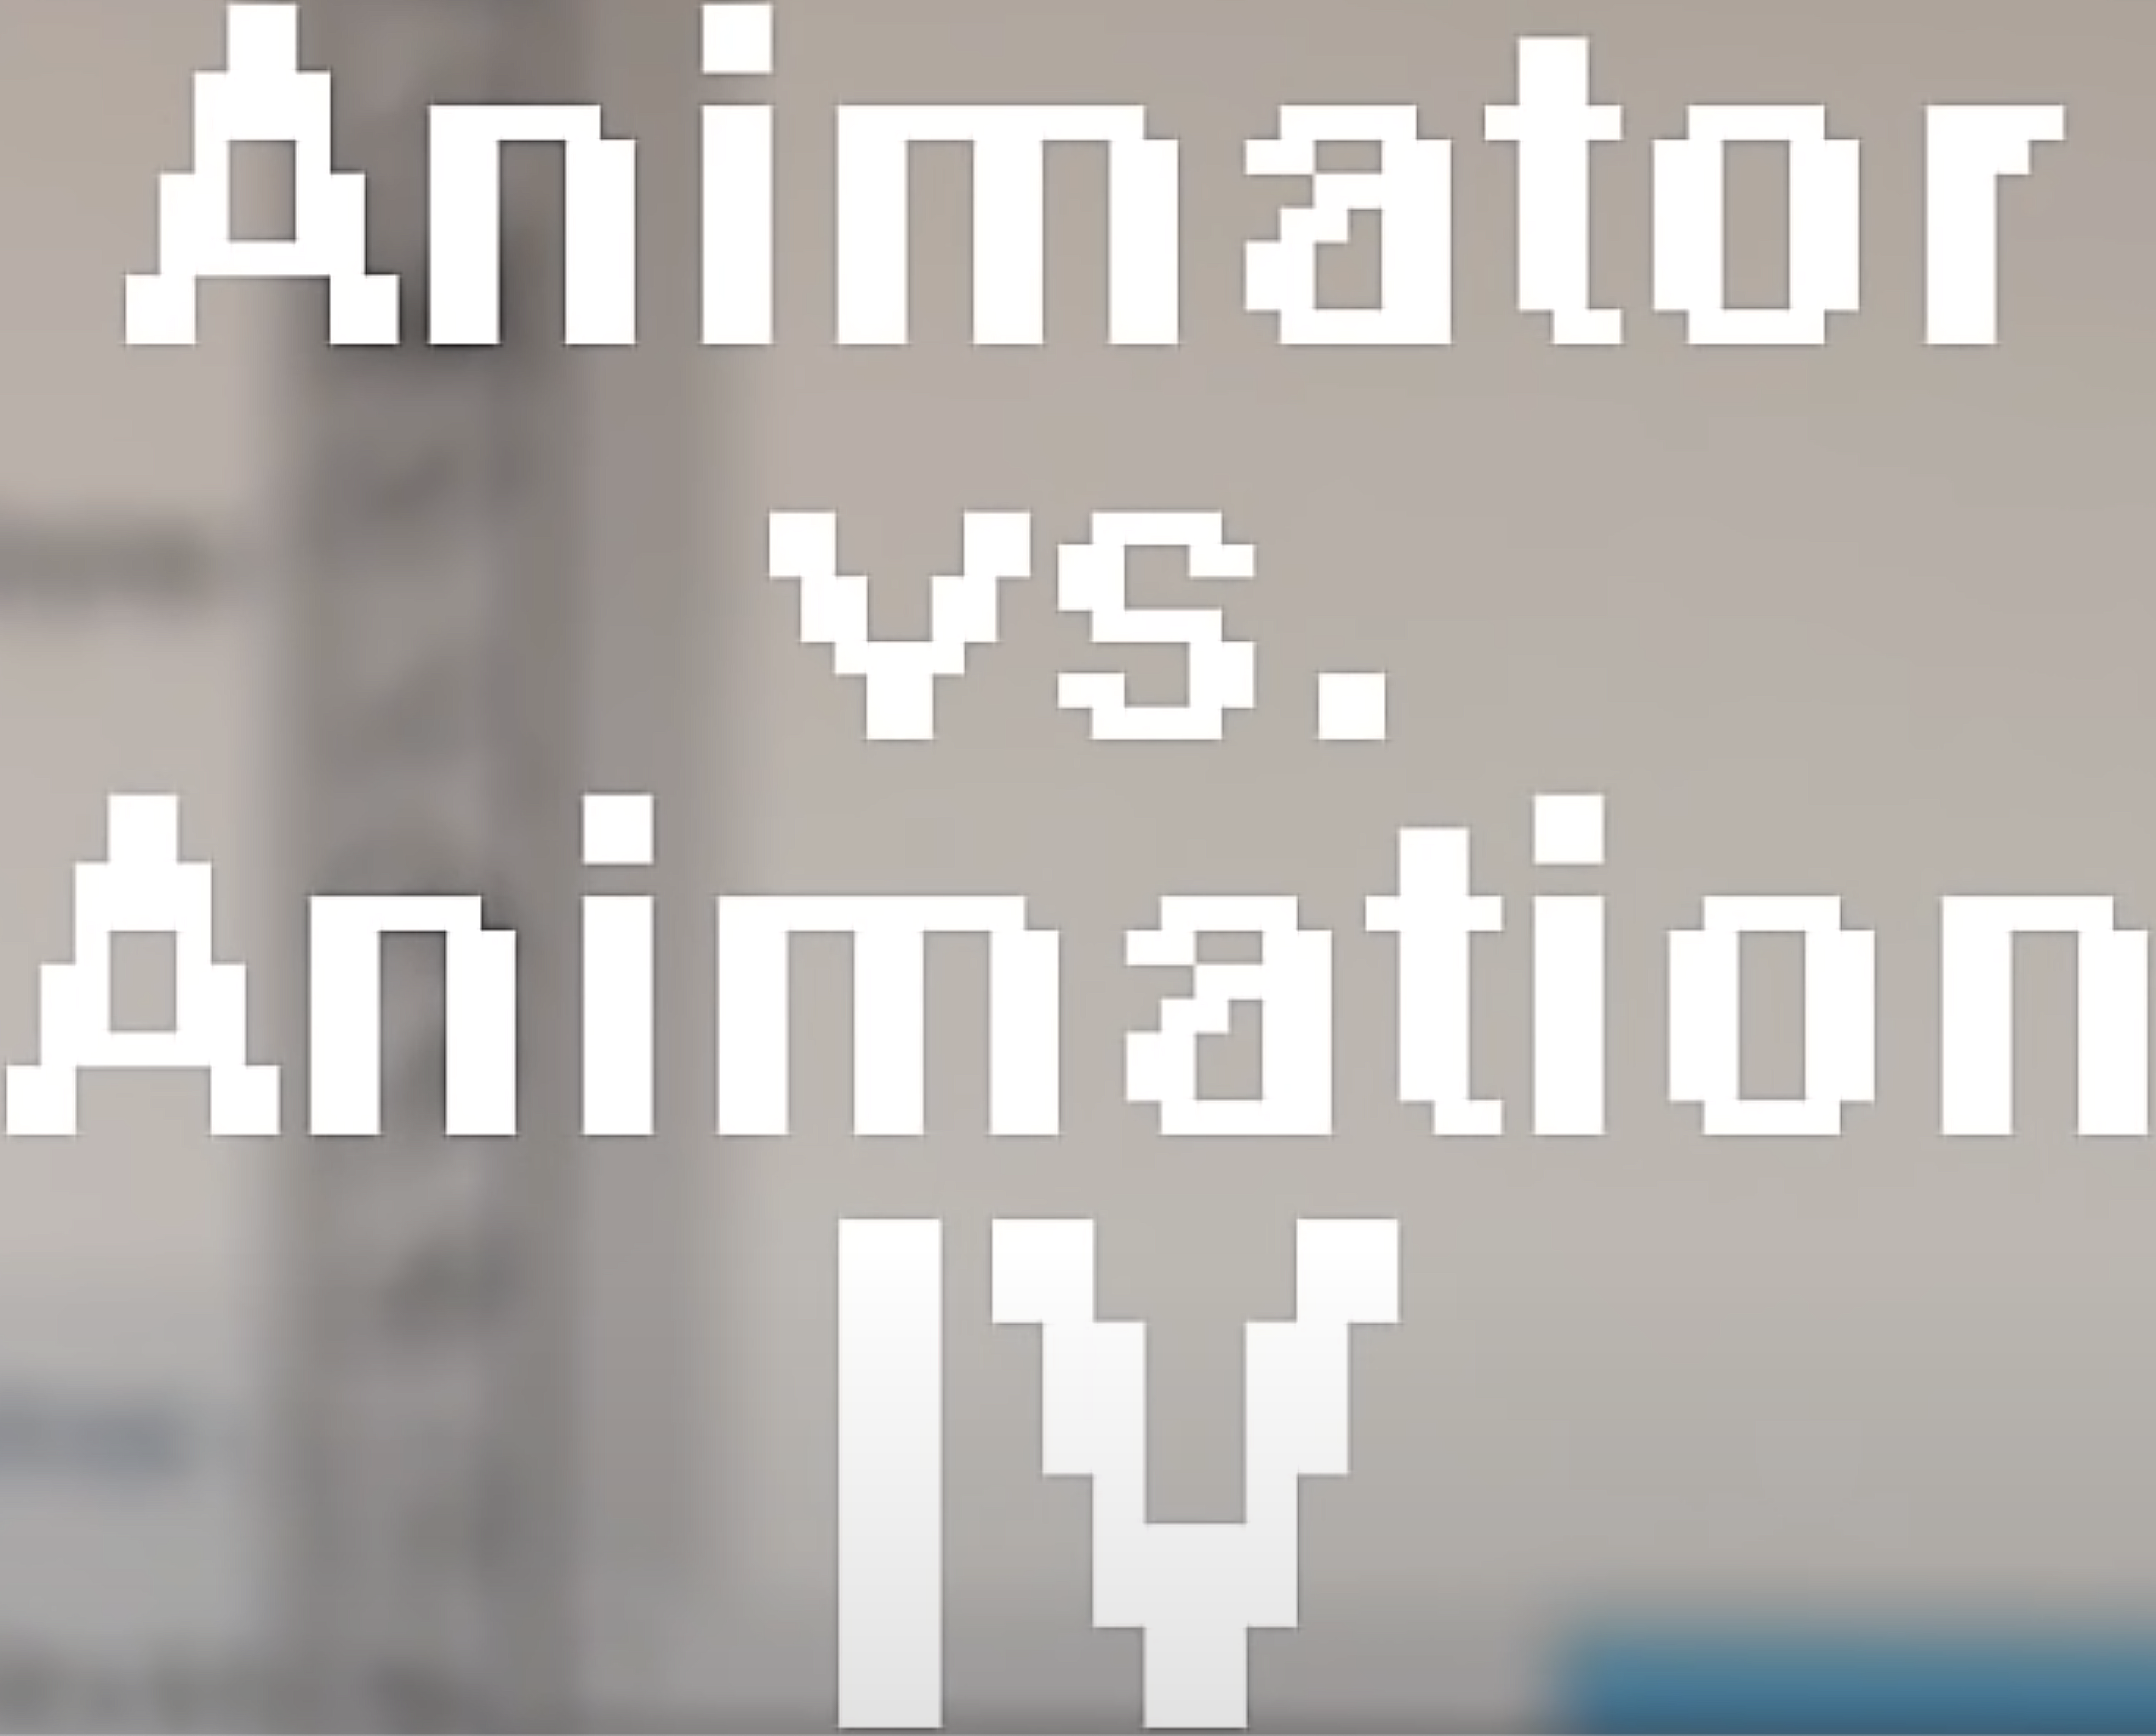 Staffs, Animator vs. Animation Wiki